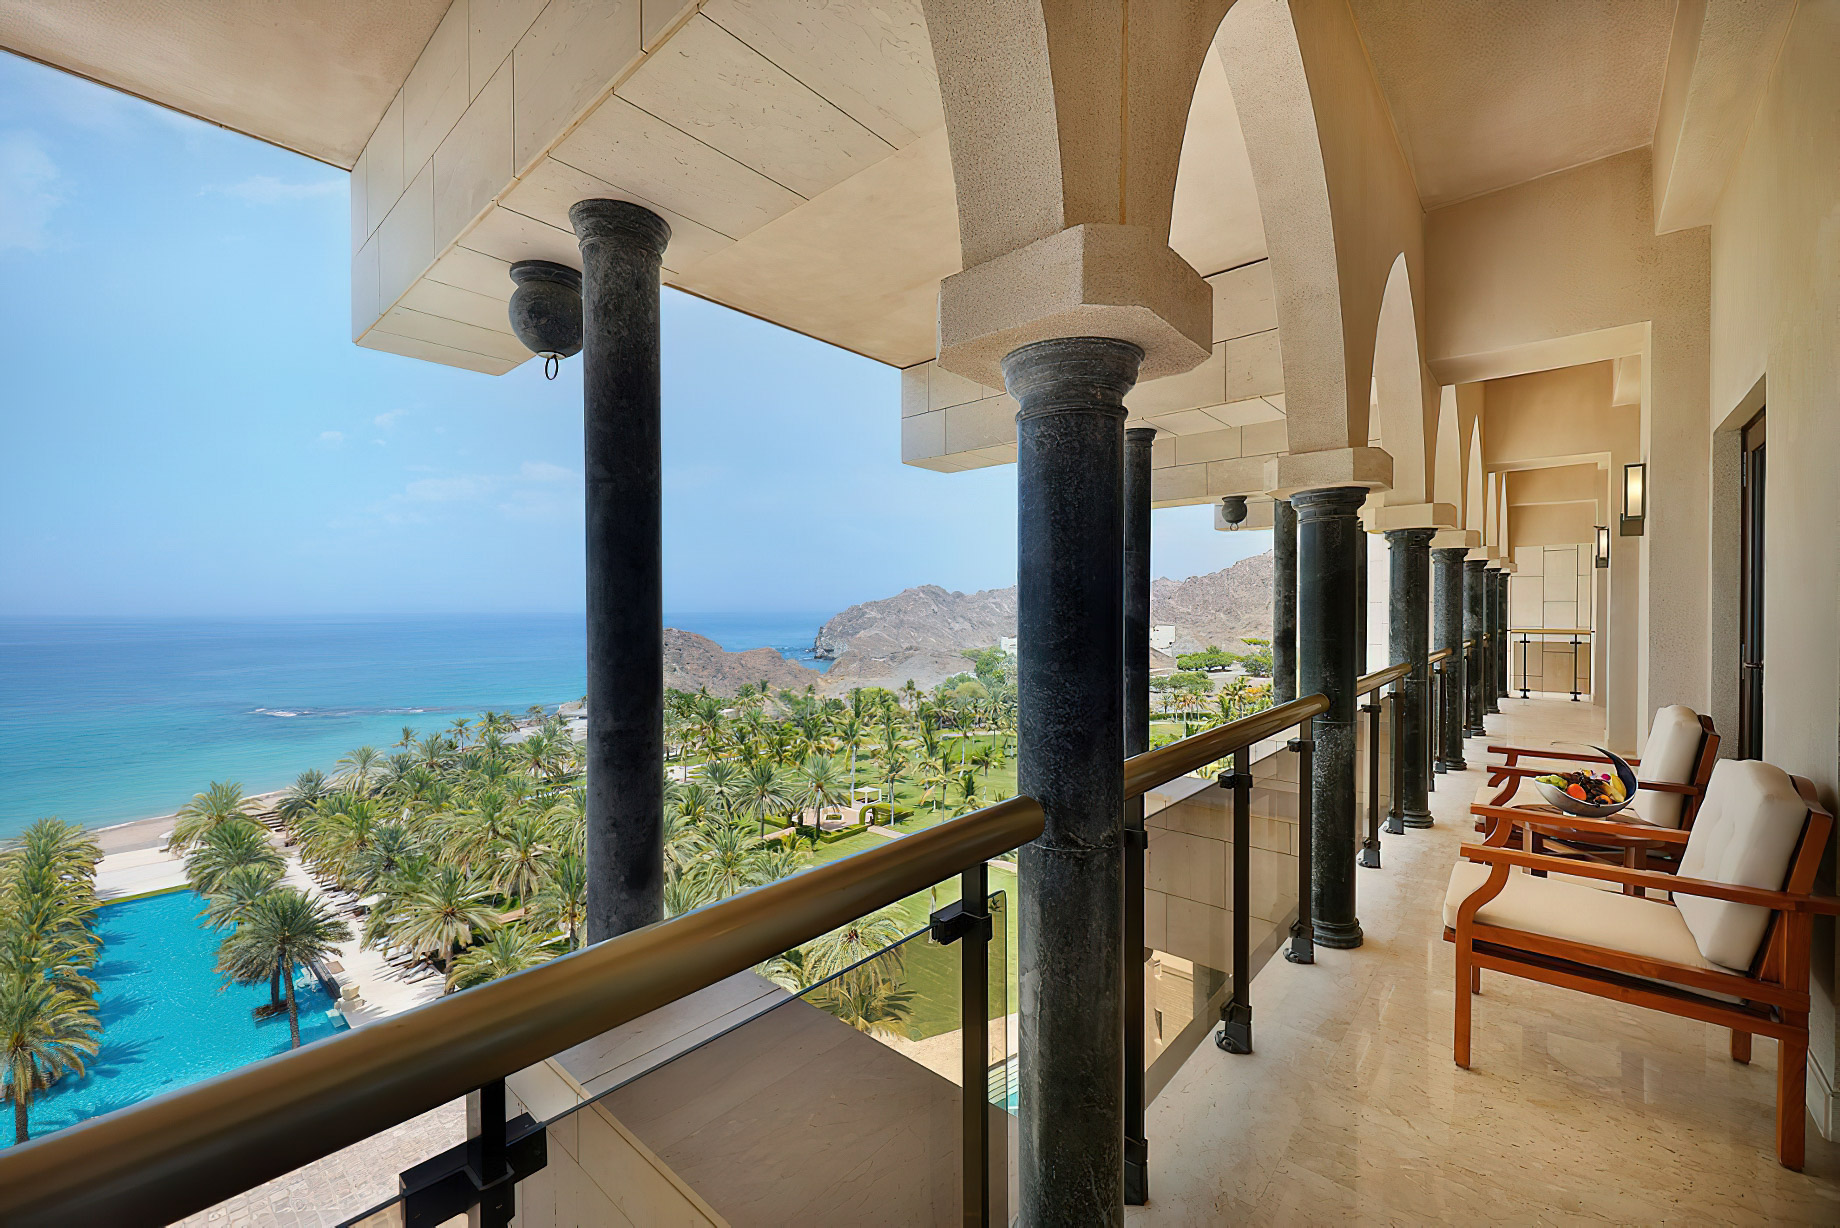 Al Bustan Palace, A Ritz-Carlton Hotel – Muscat, Oman – Presidential Sea View Suite Balcony